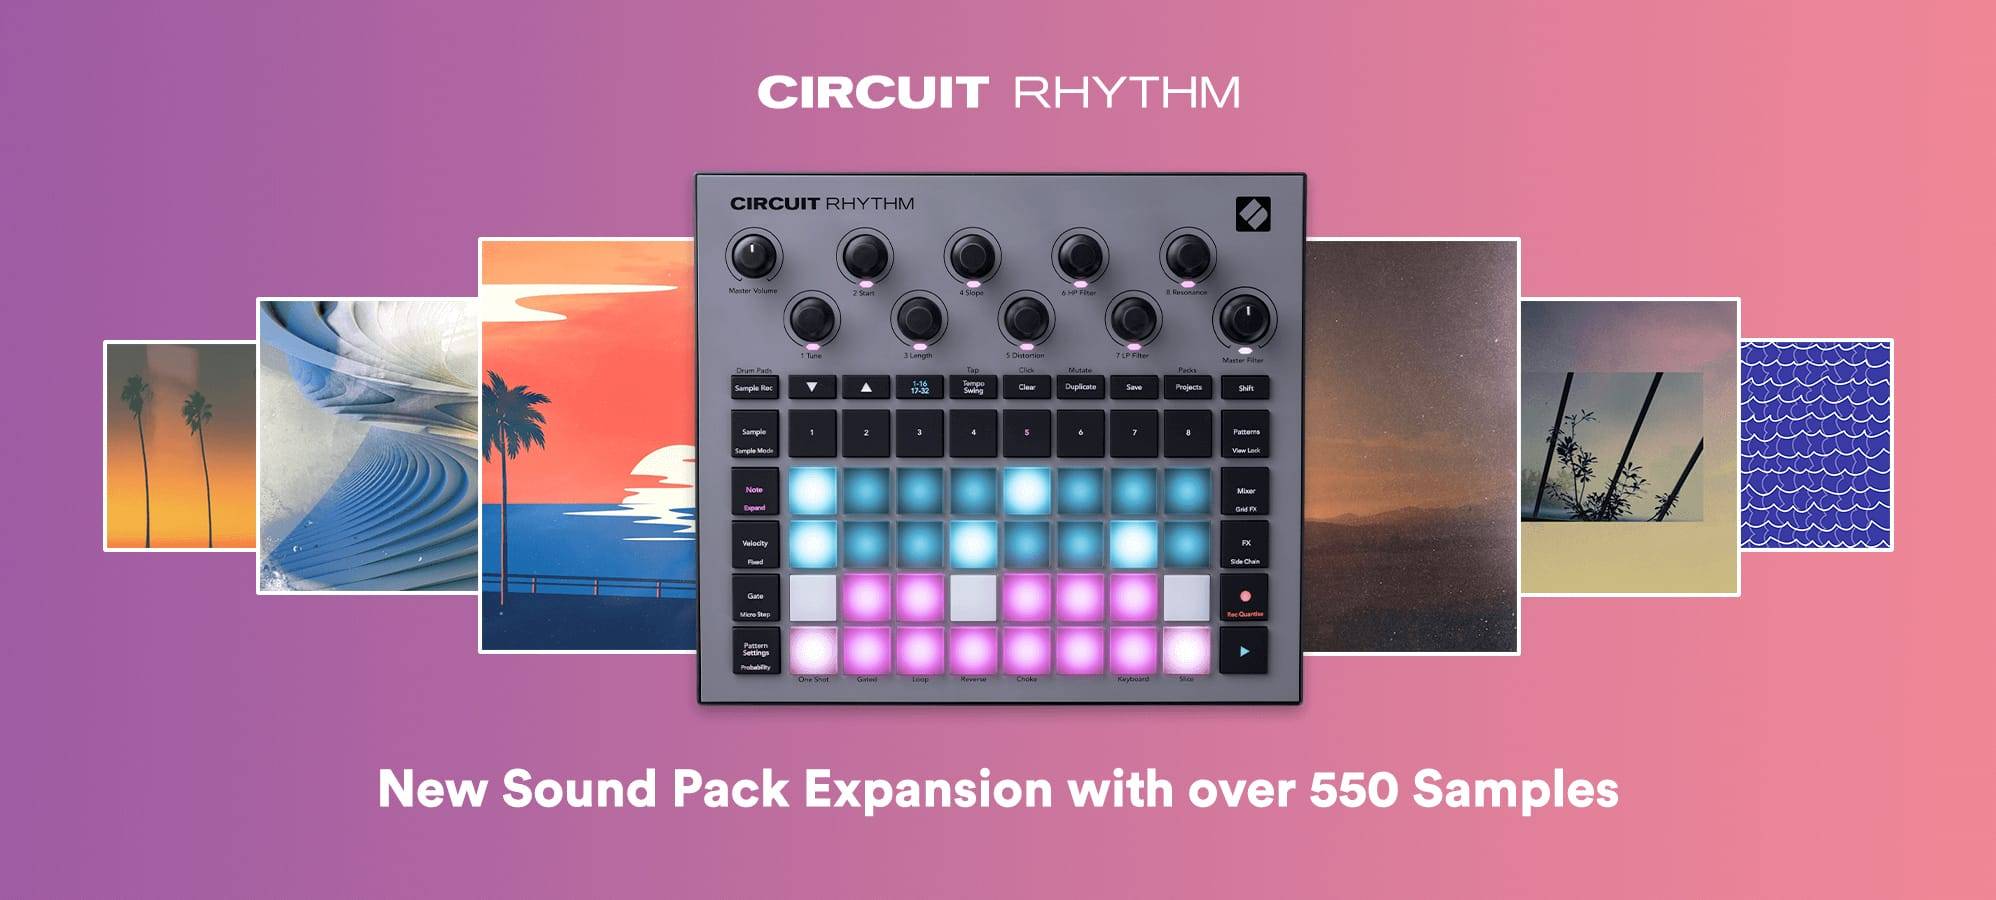 New Novation Circuit Rhythm free sample expansion pack